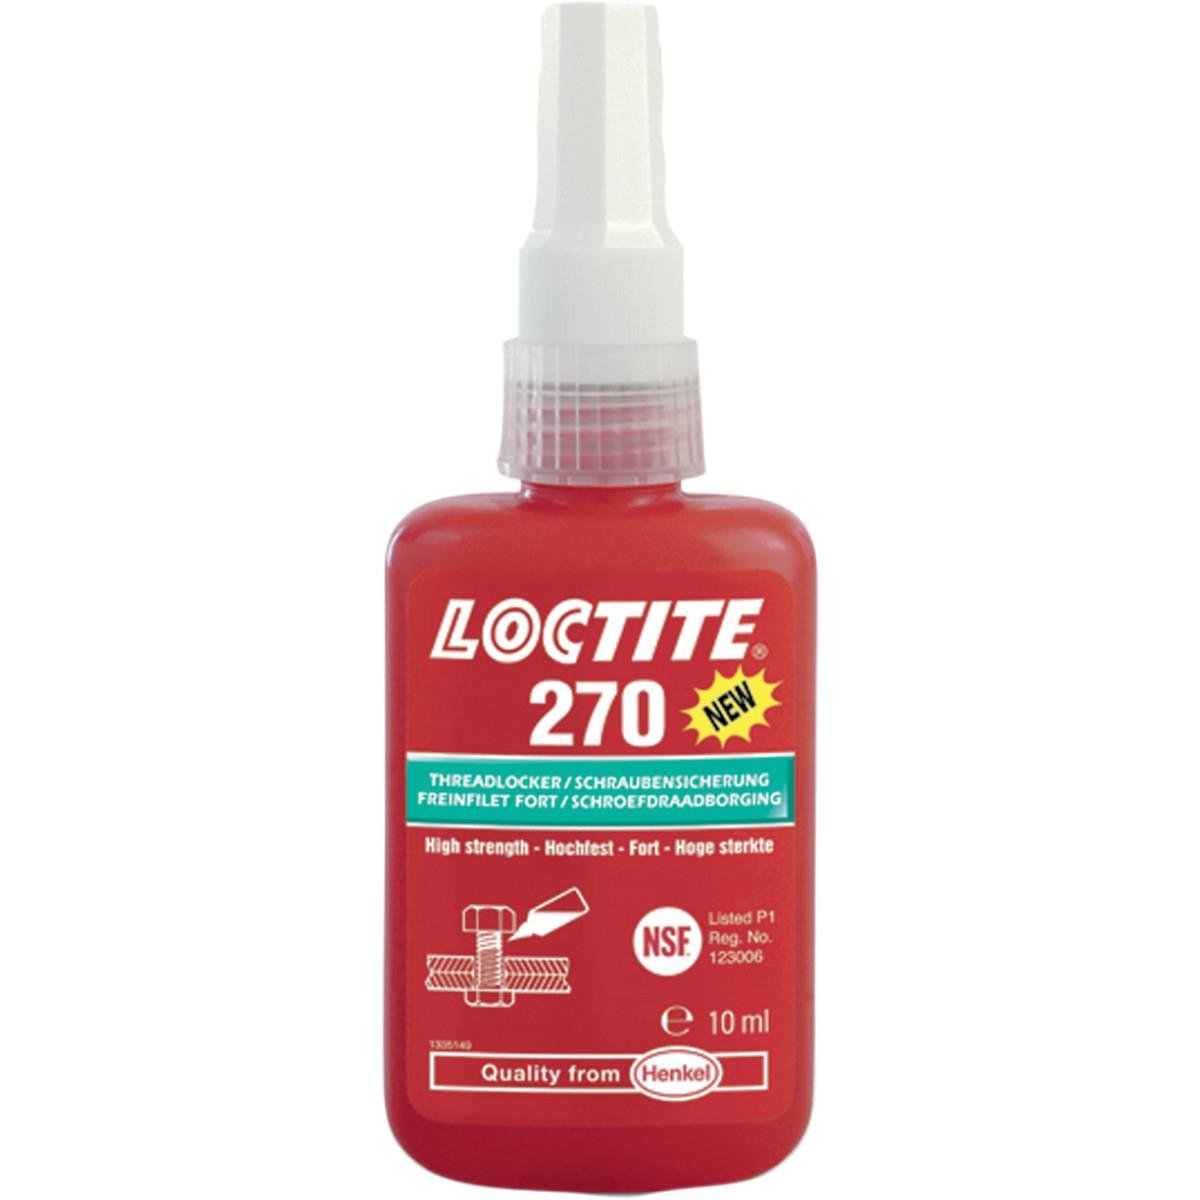 Loctite Threadlocking 270 High strength, 10 ml